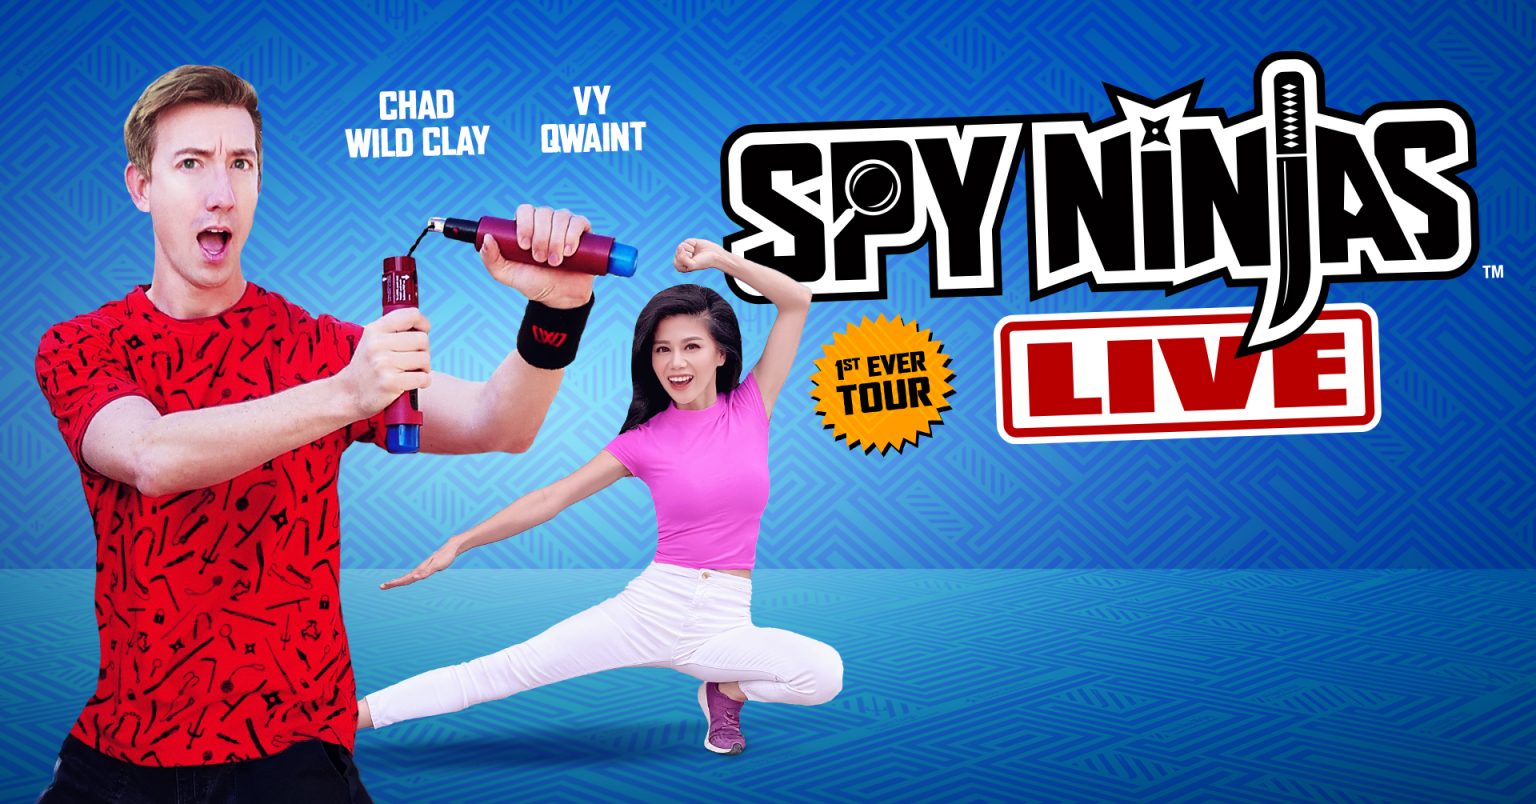 Spy Ninjas Live [CANCELLED] at Pechanga Arena